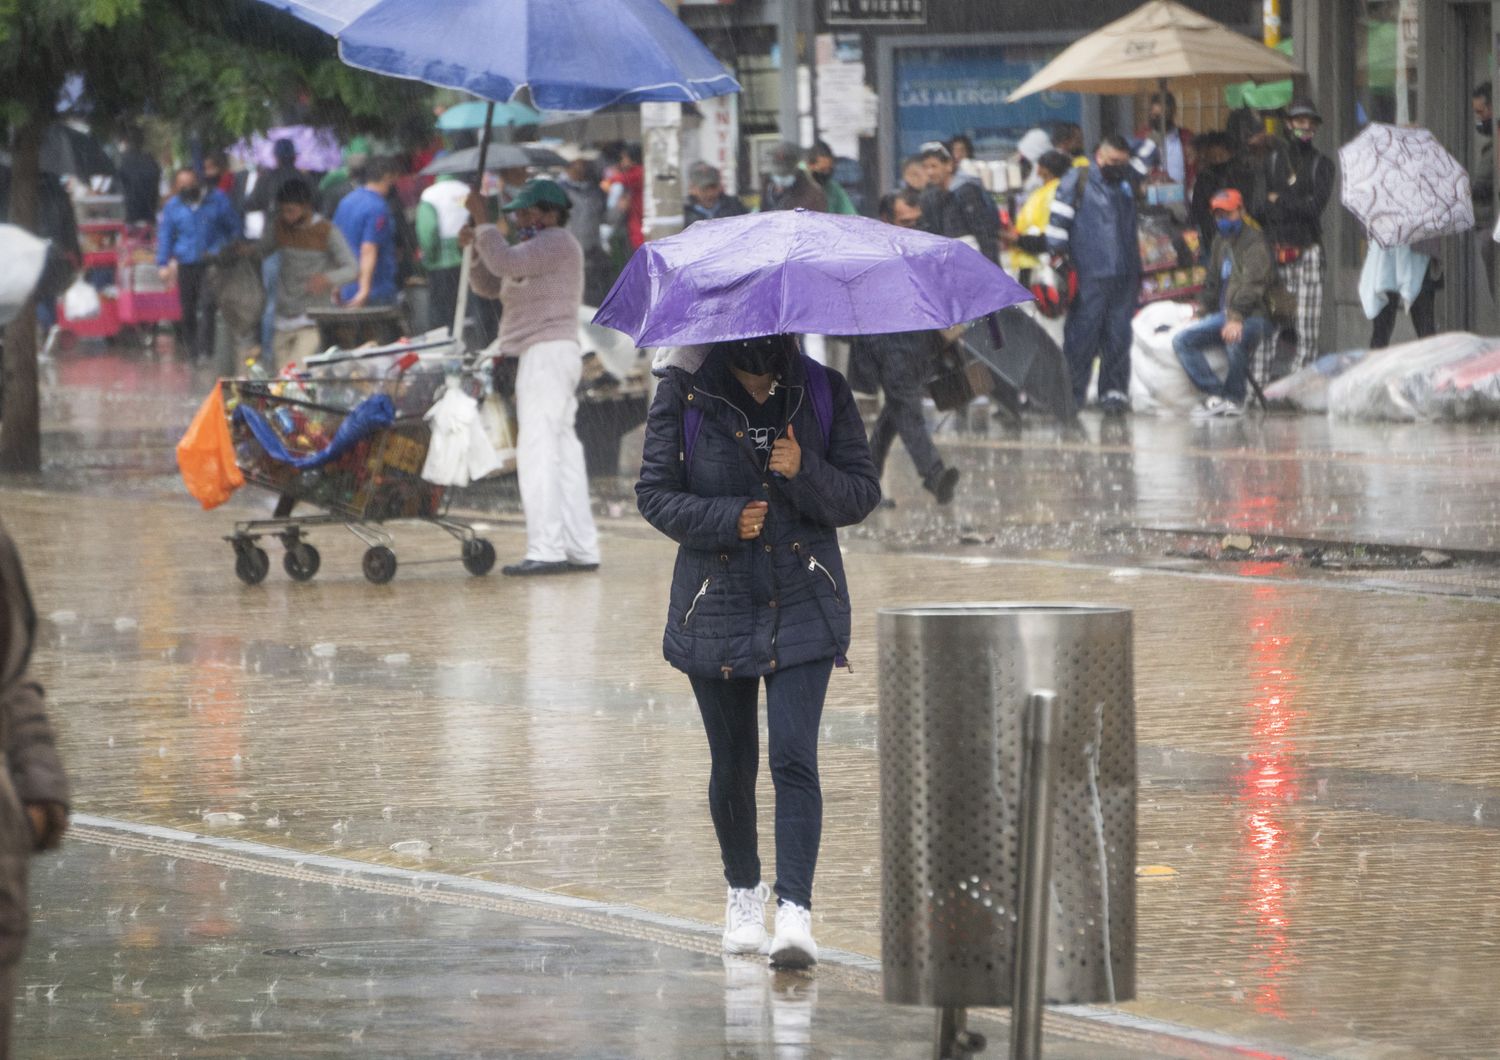 Piogge torrenziali in Colombia